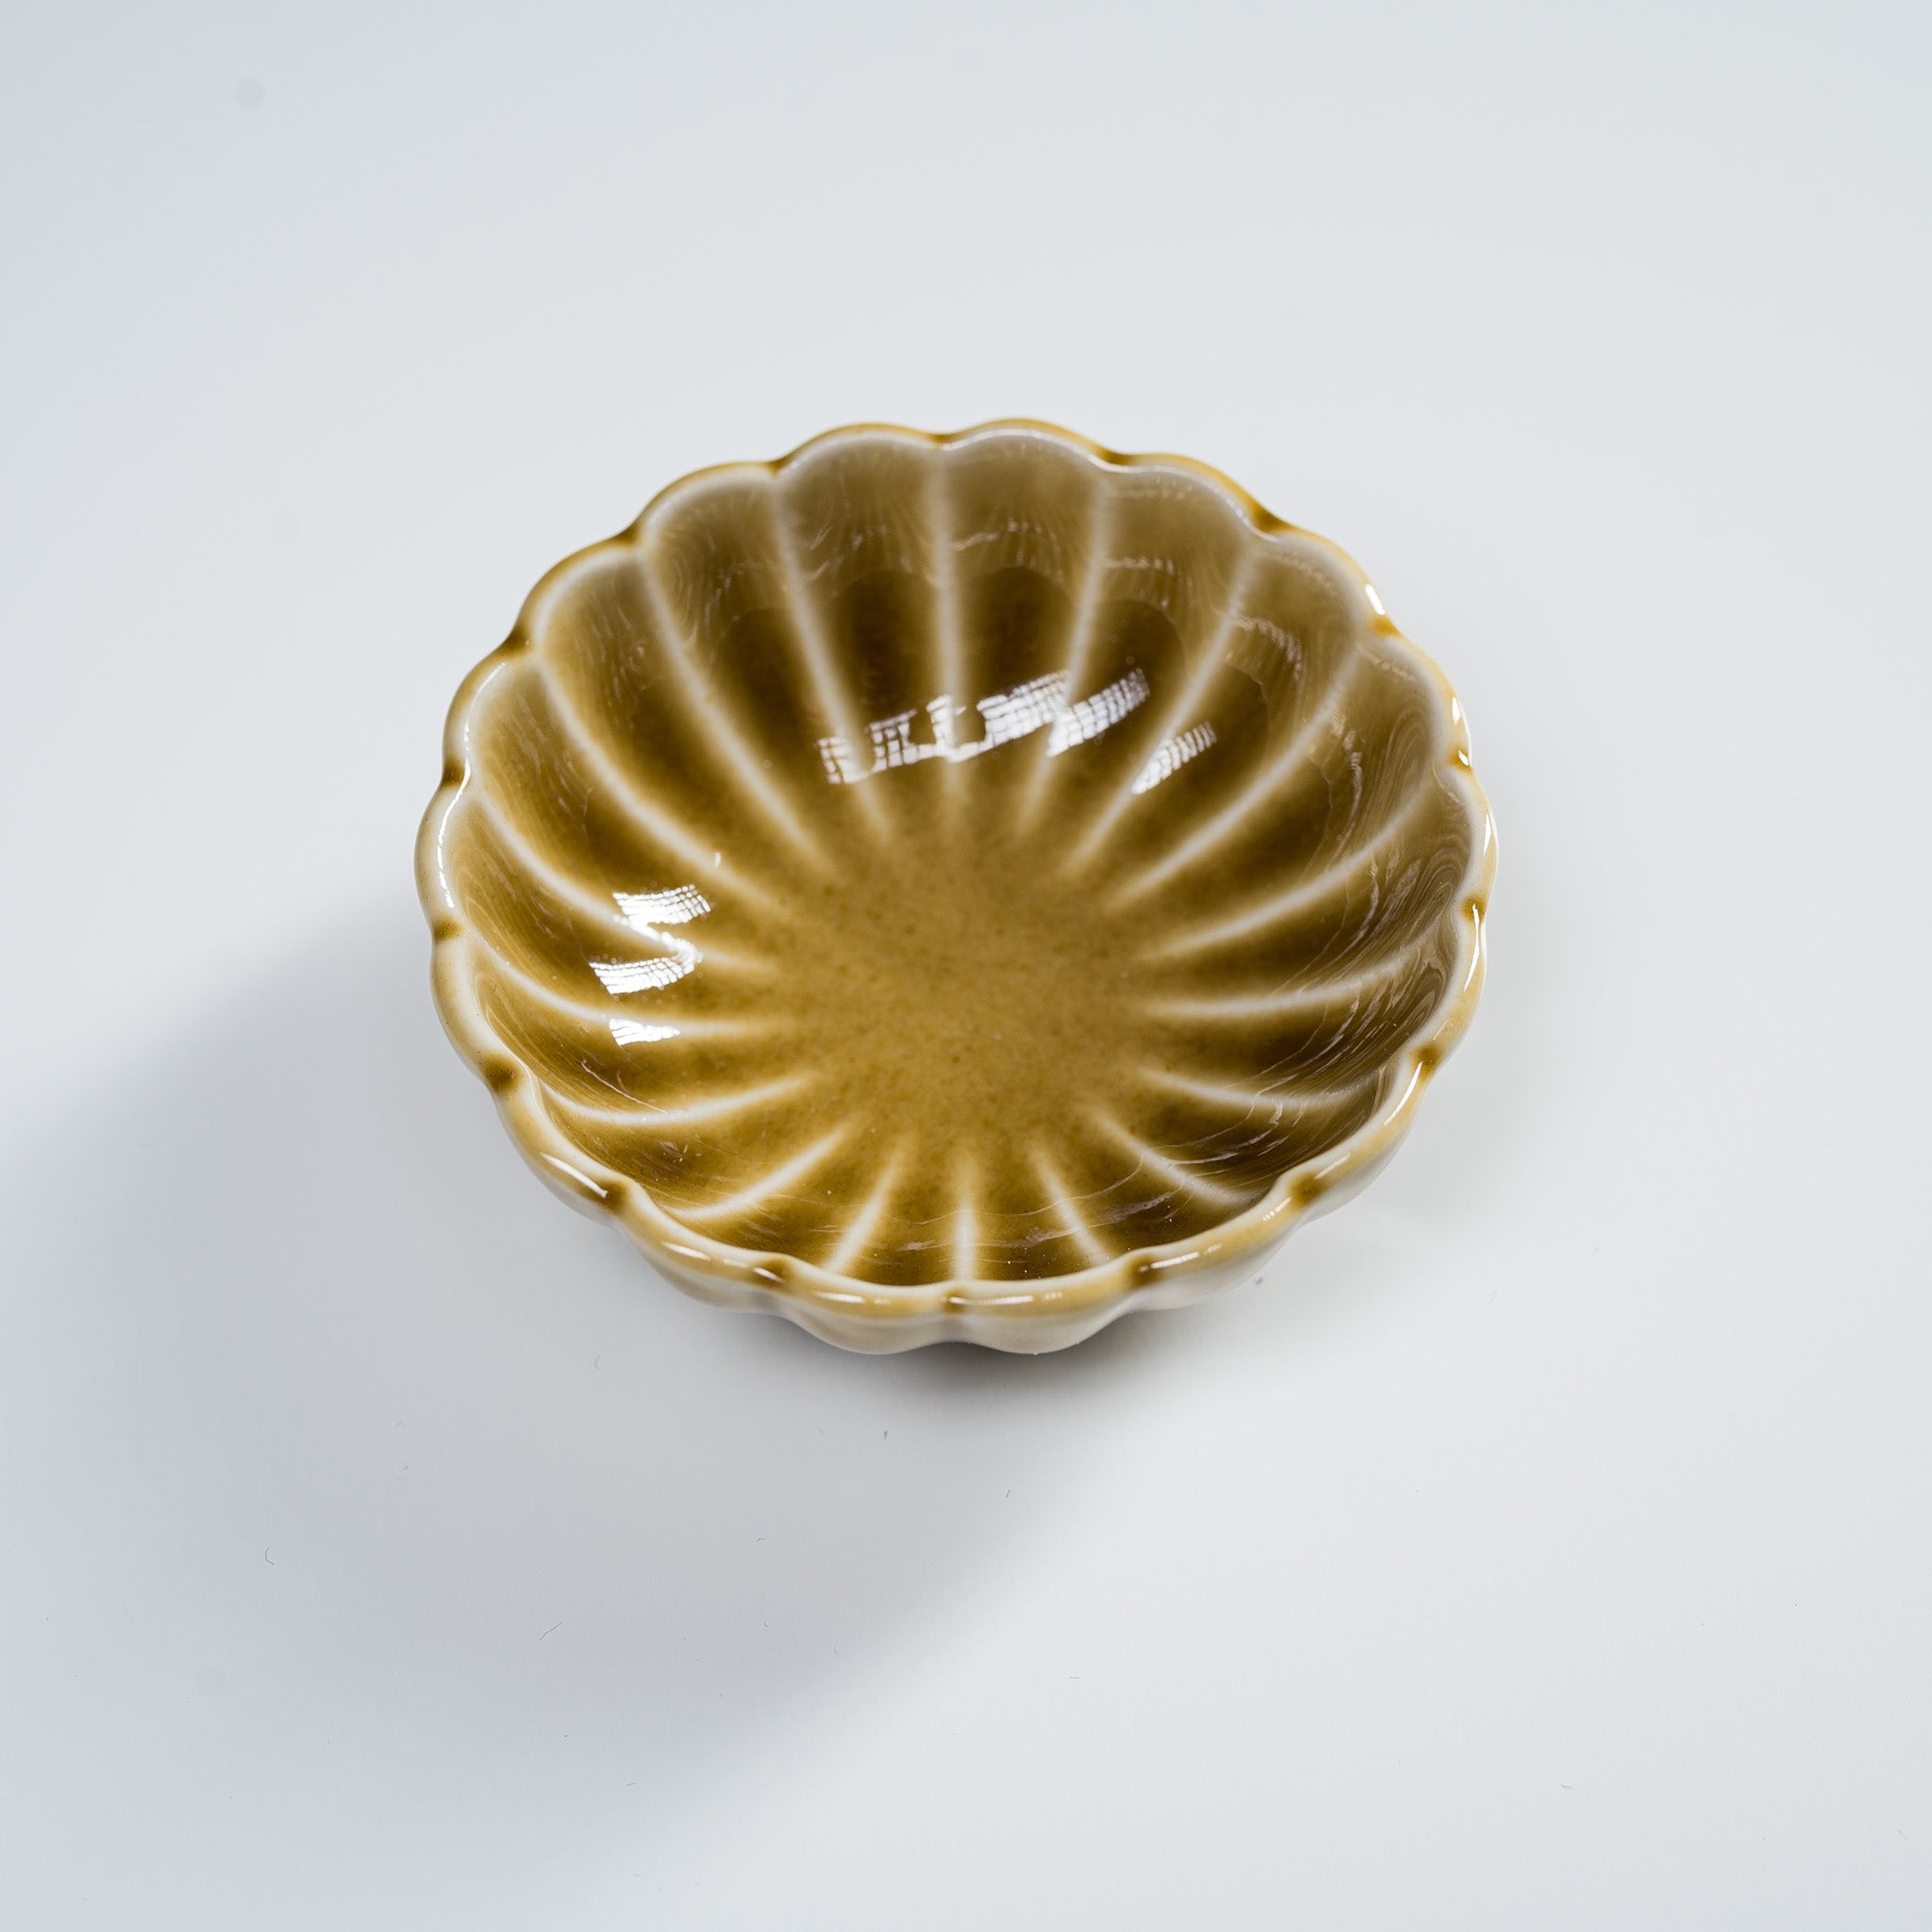 Mino ware Mini Flower Bowl, Sauce Dish - 6 cm / 美濃焼き ミニ小鉢